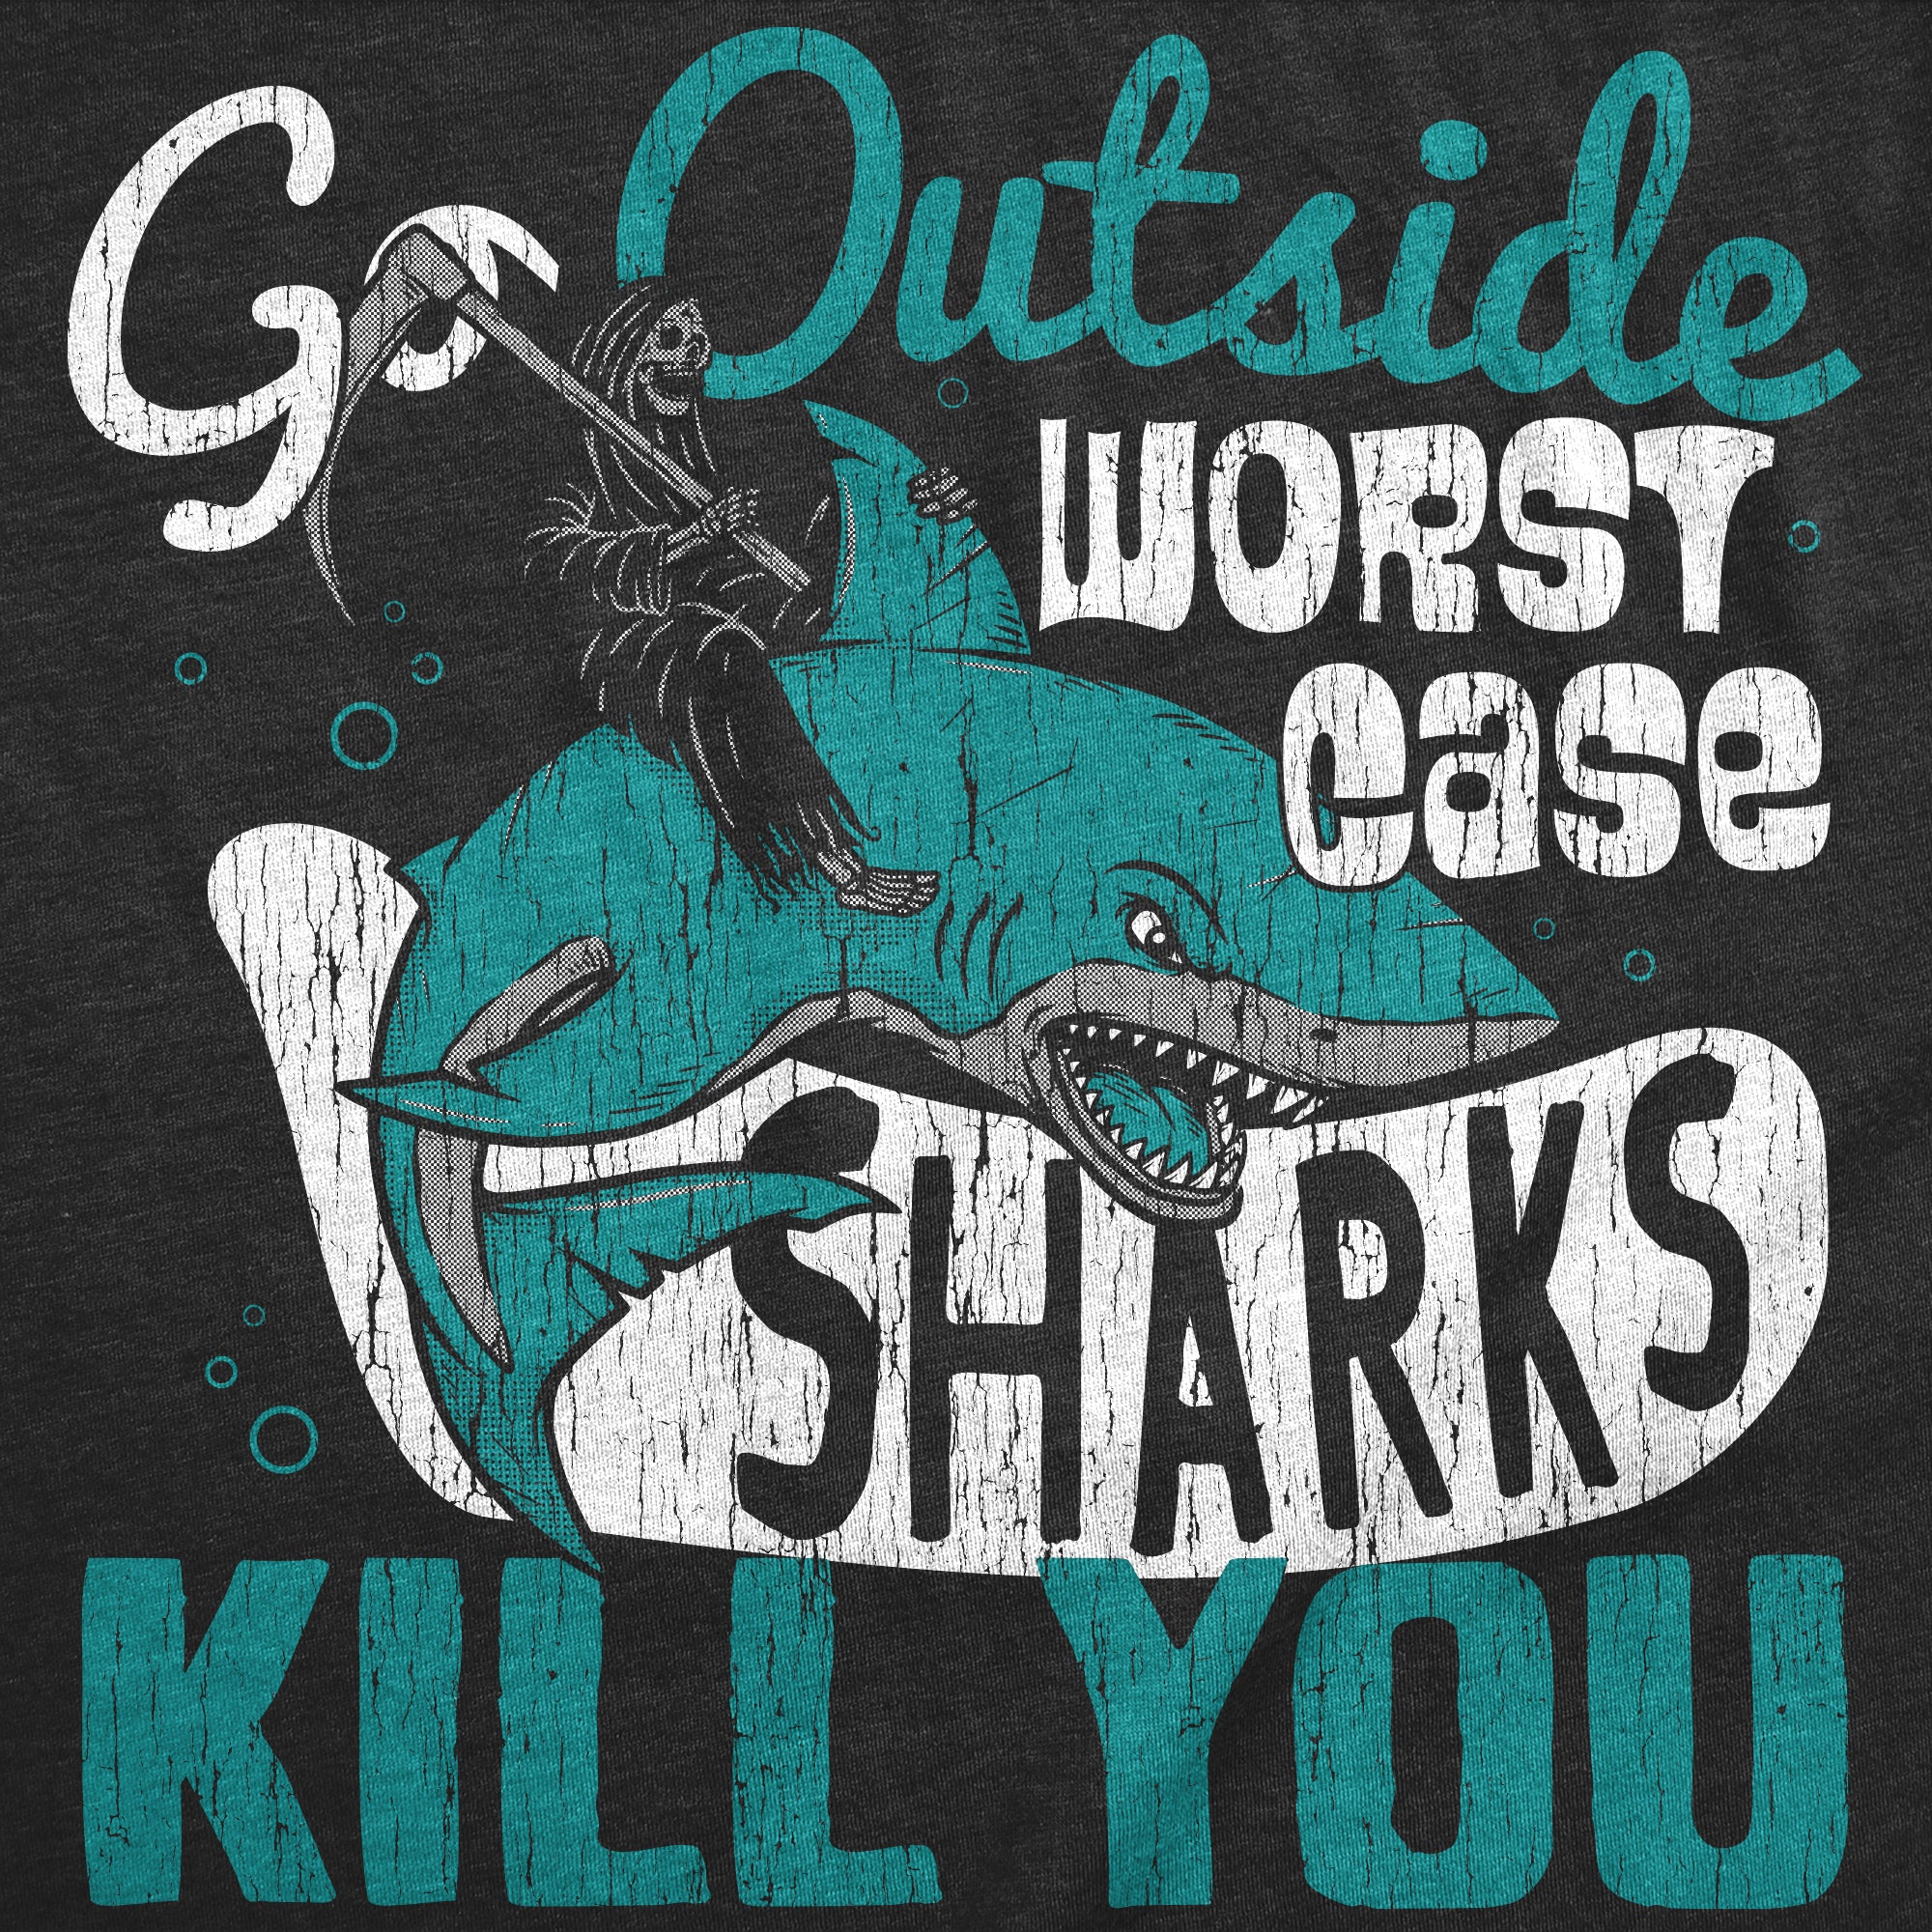 Funny Heather Black - SHARKS Go Outside Worst Case Sharks Kill You Mens T Shirt Nerdy Sarcastic Tee